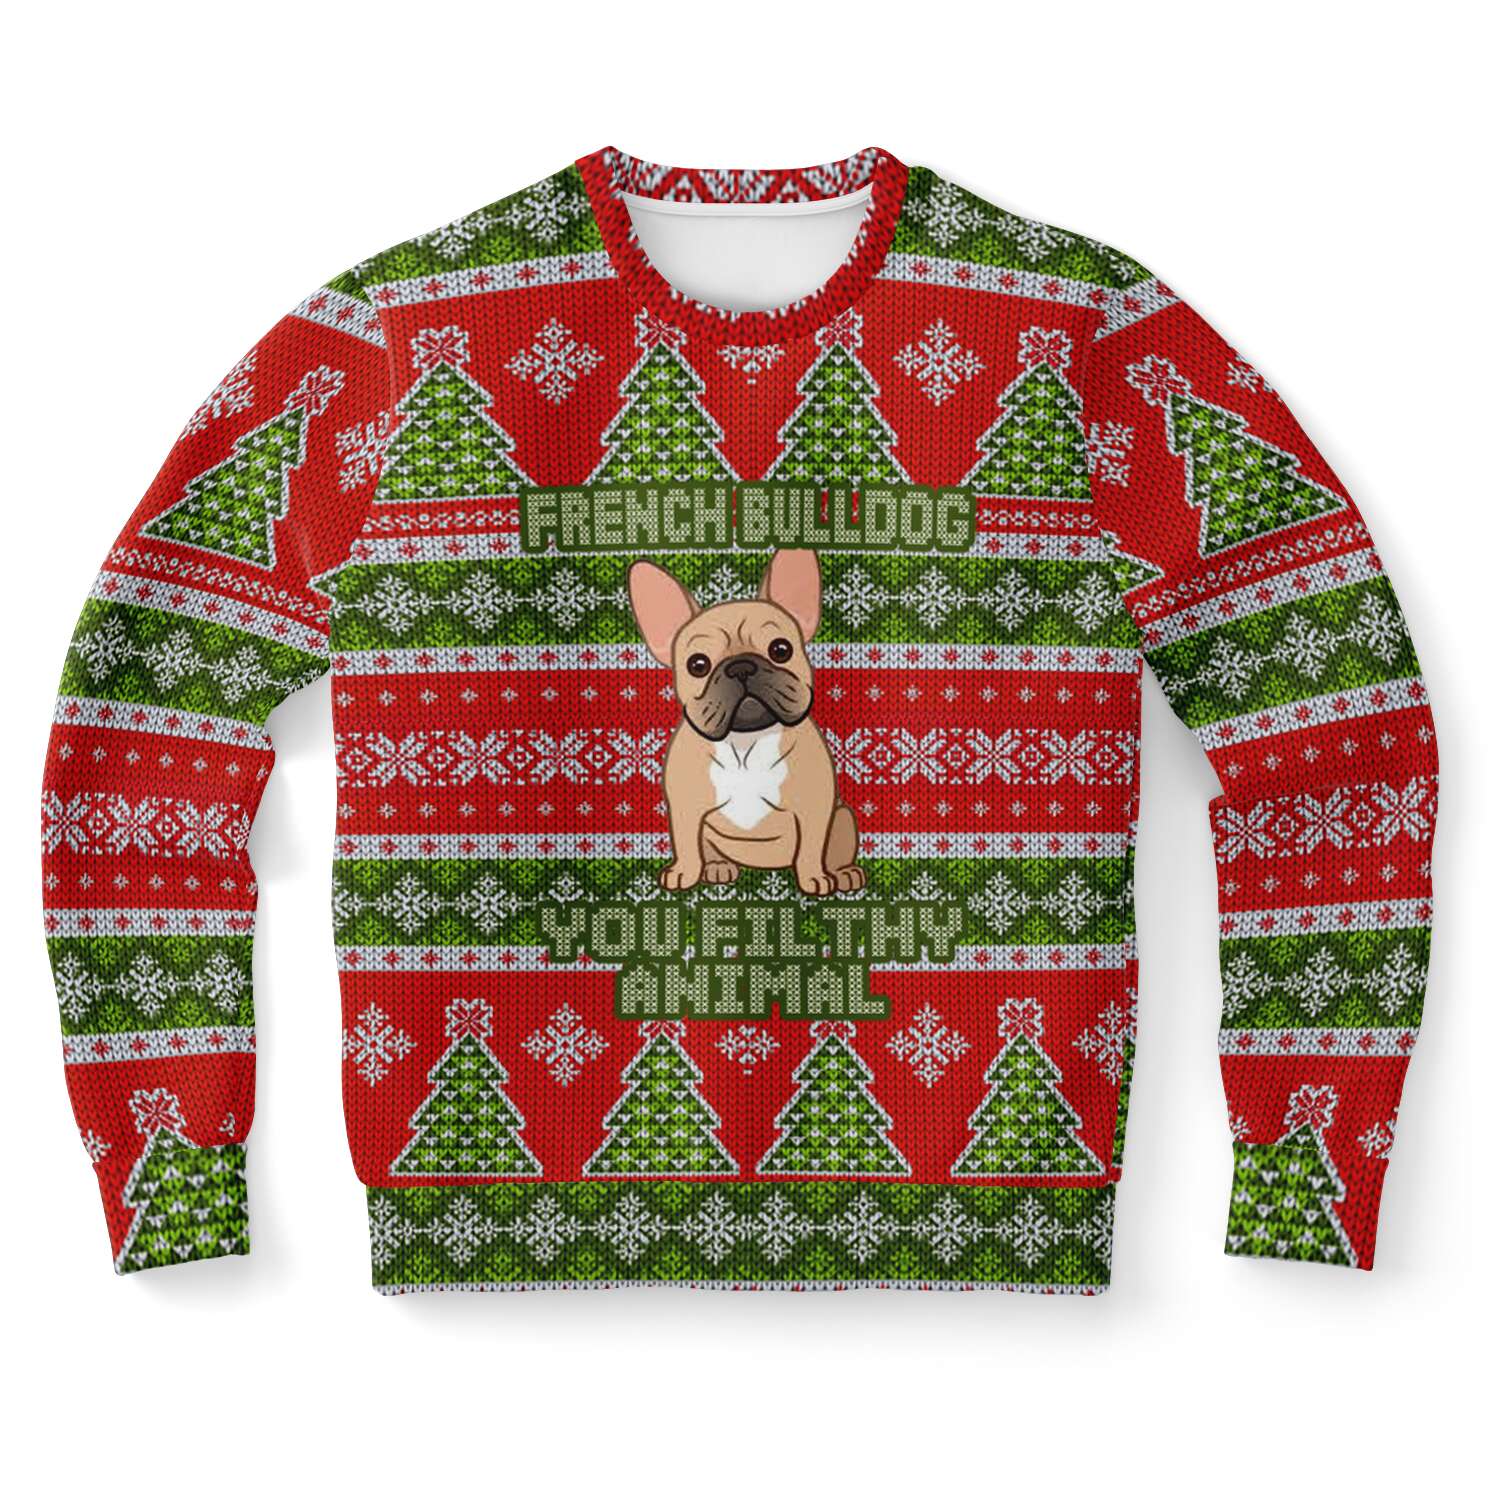 Lucy - French Bulldog Sweater - Frenchie Bulldog Shop